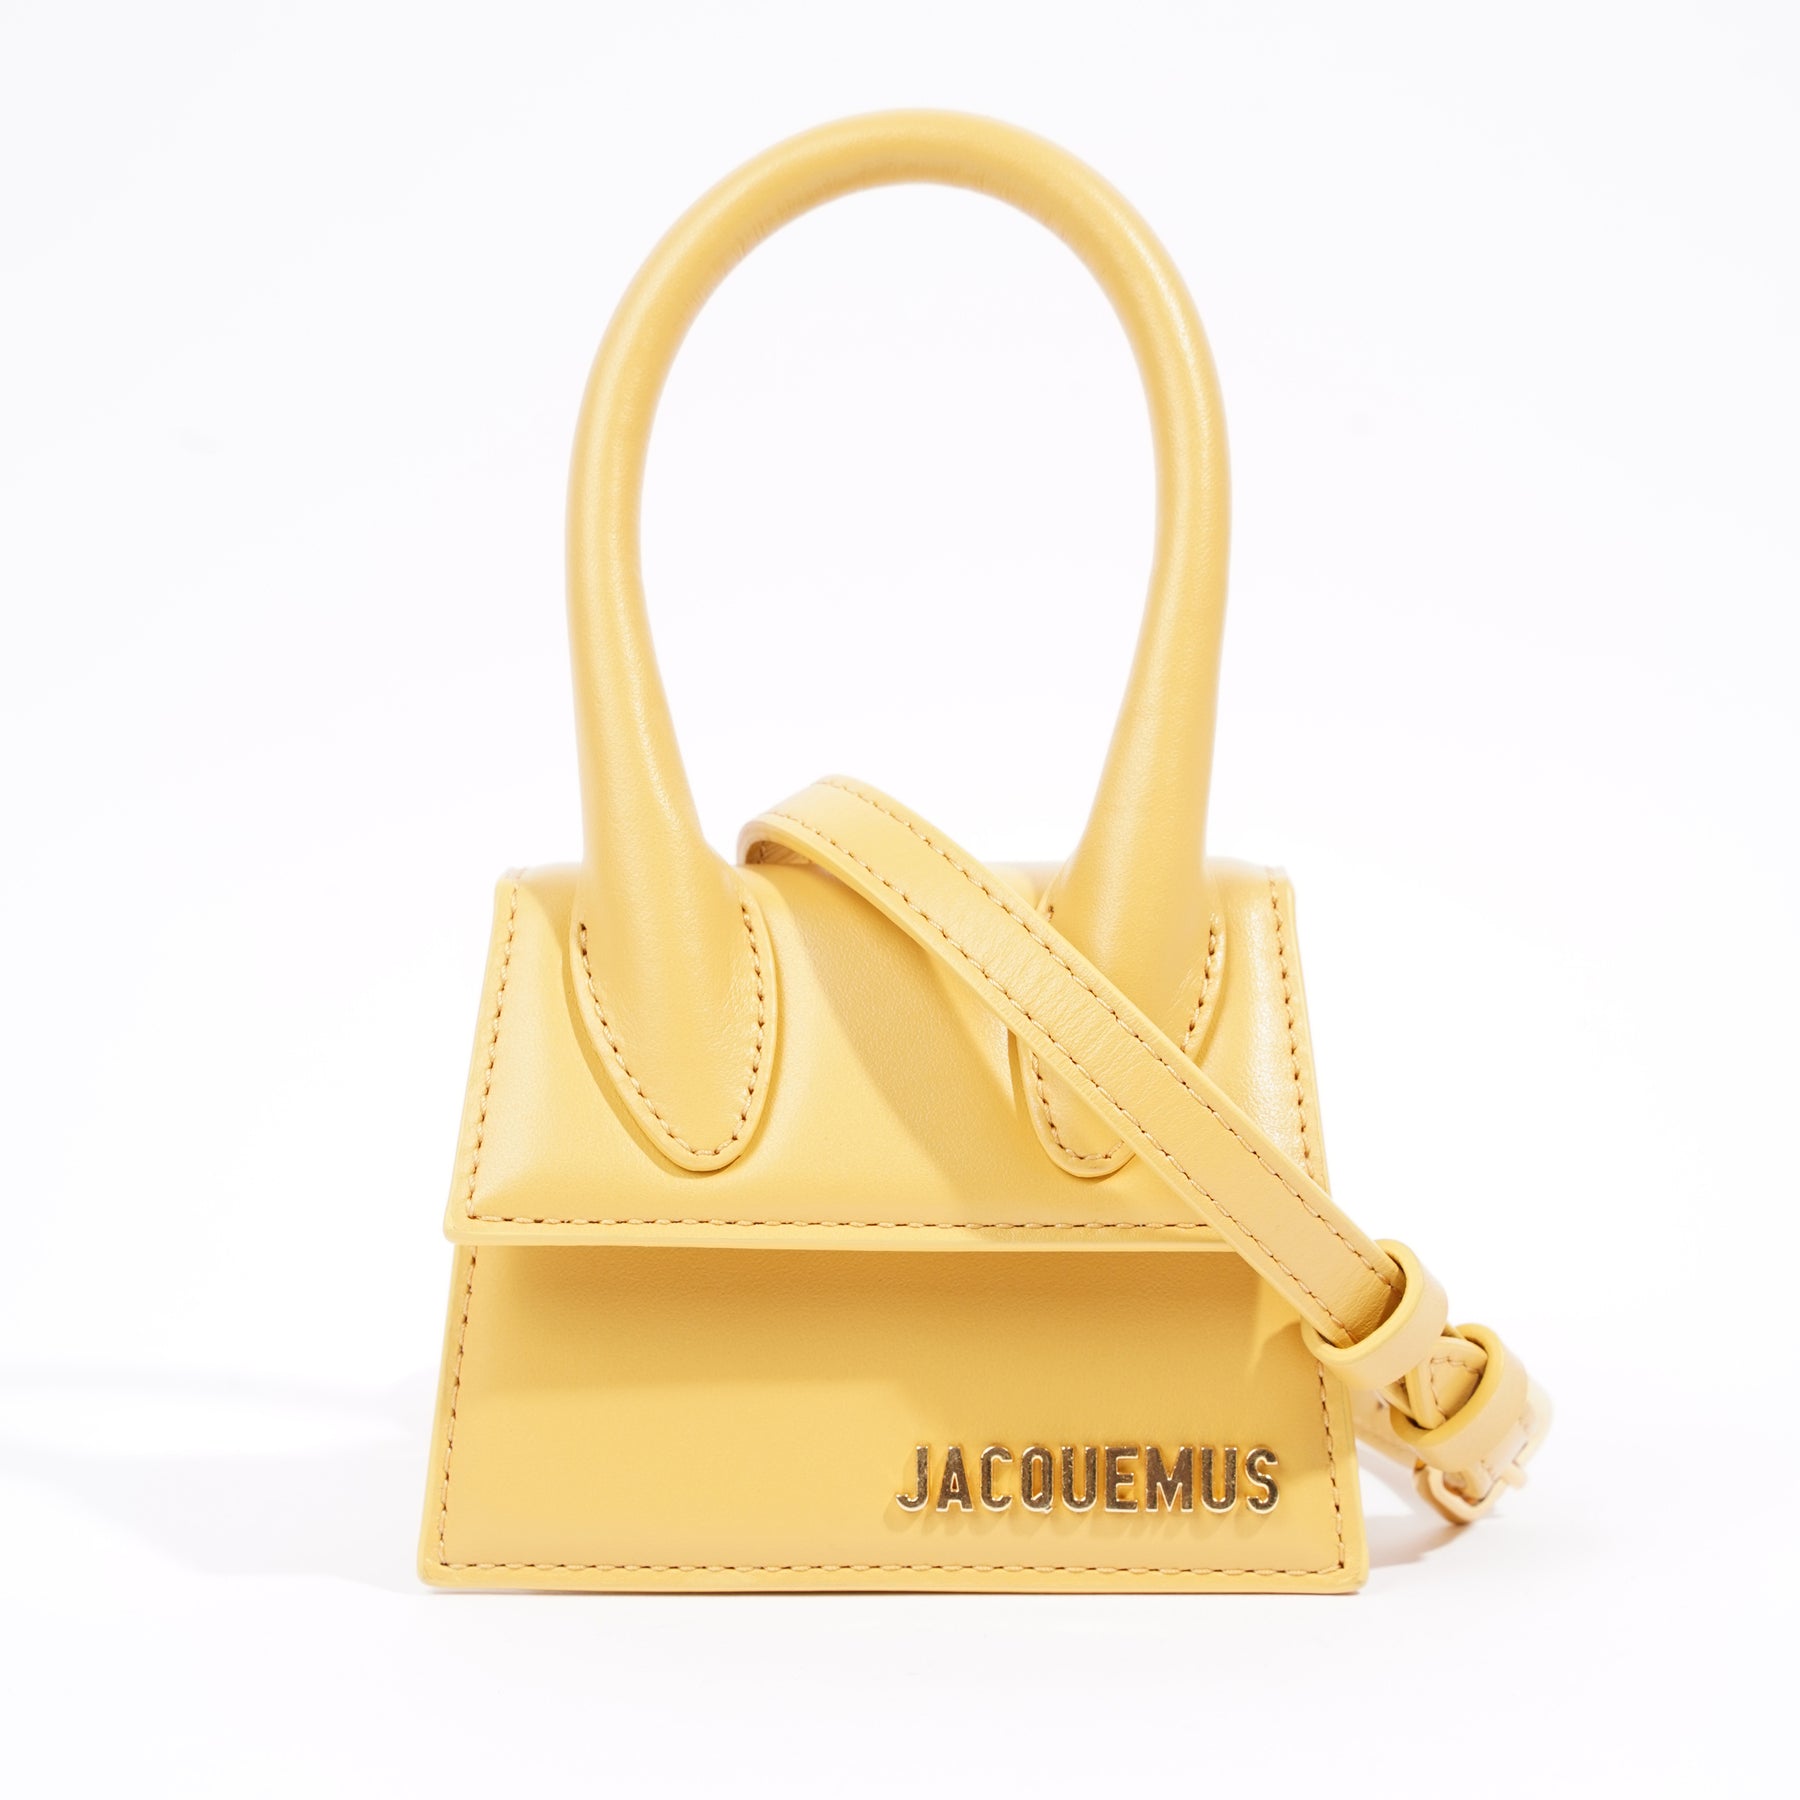 Jacquemus, Bags, Jacquemus Le Sac Chiquito Yellow Suede